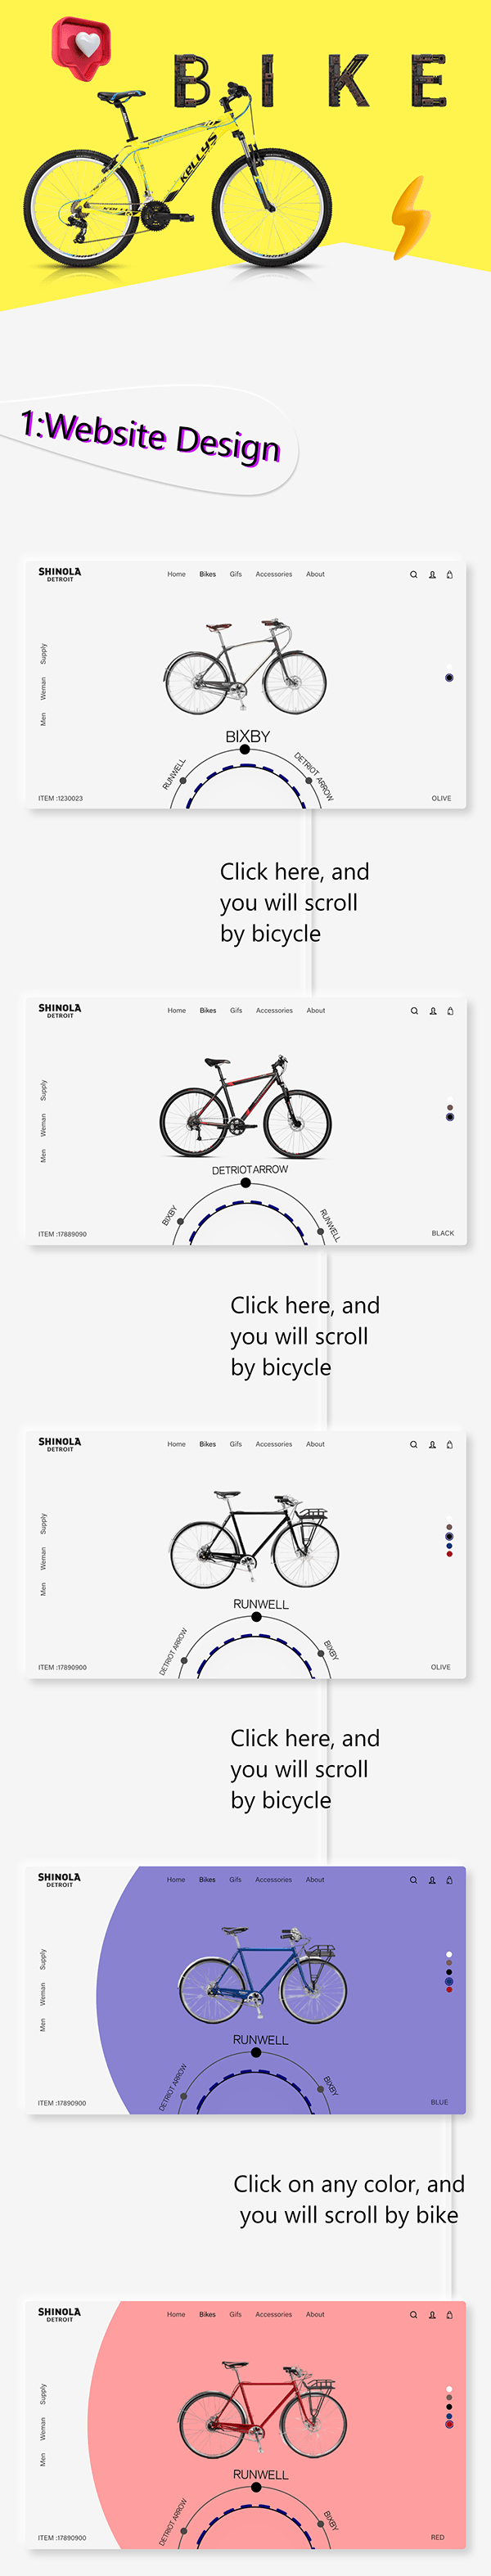 Bike App And Website Design (Interaction Design)